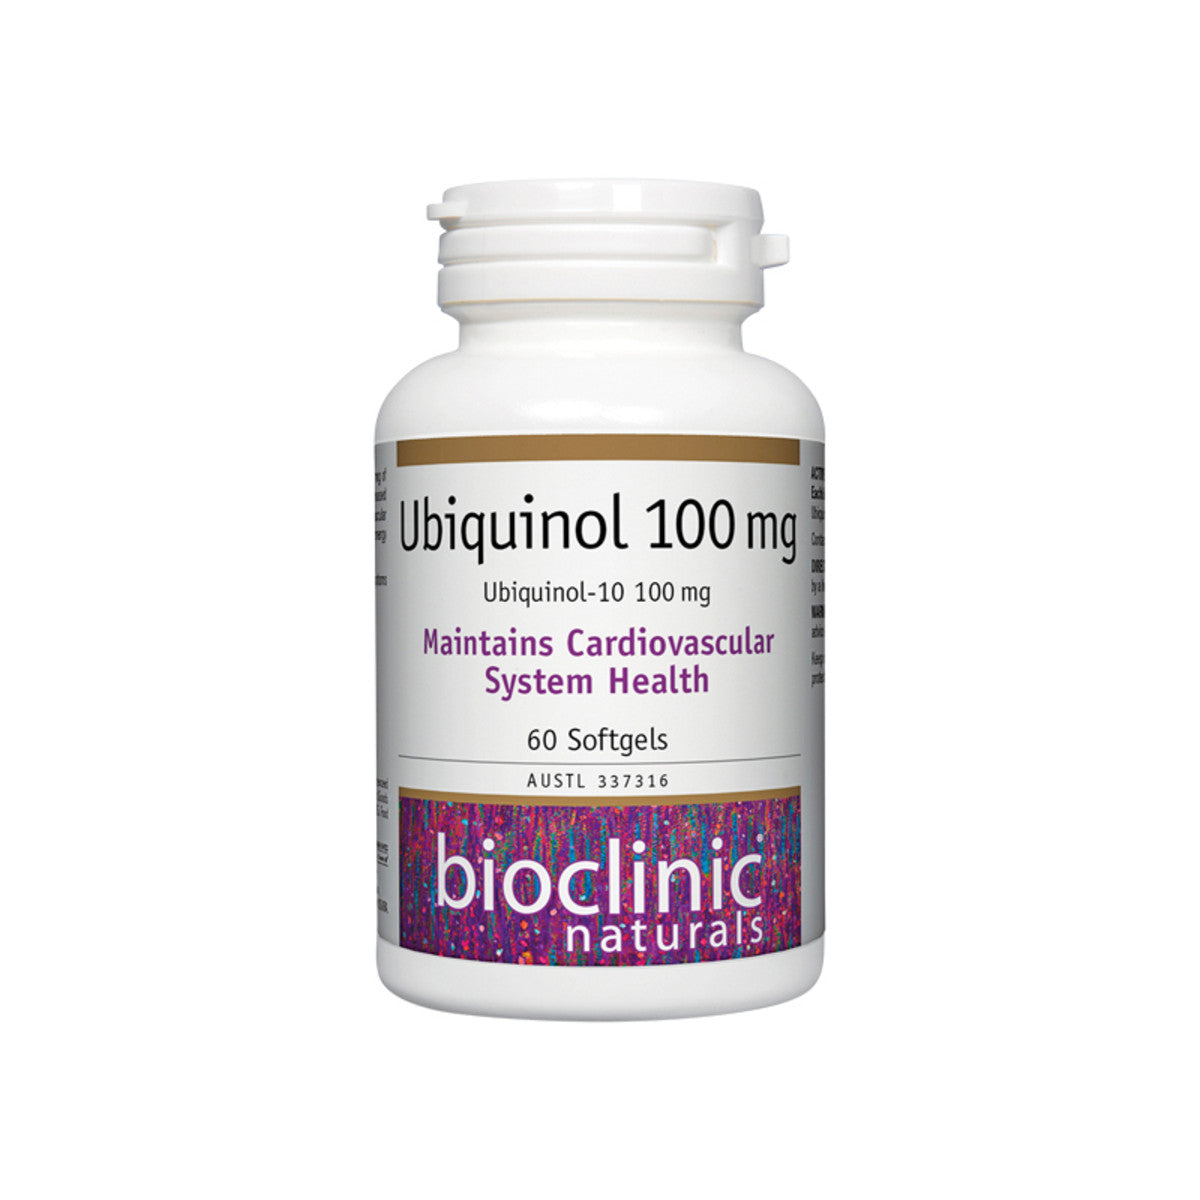 Bioclinic Naturals - Ubiquinol 100mg